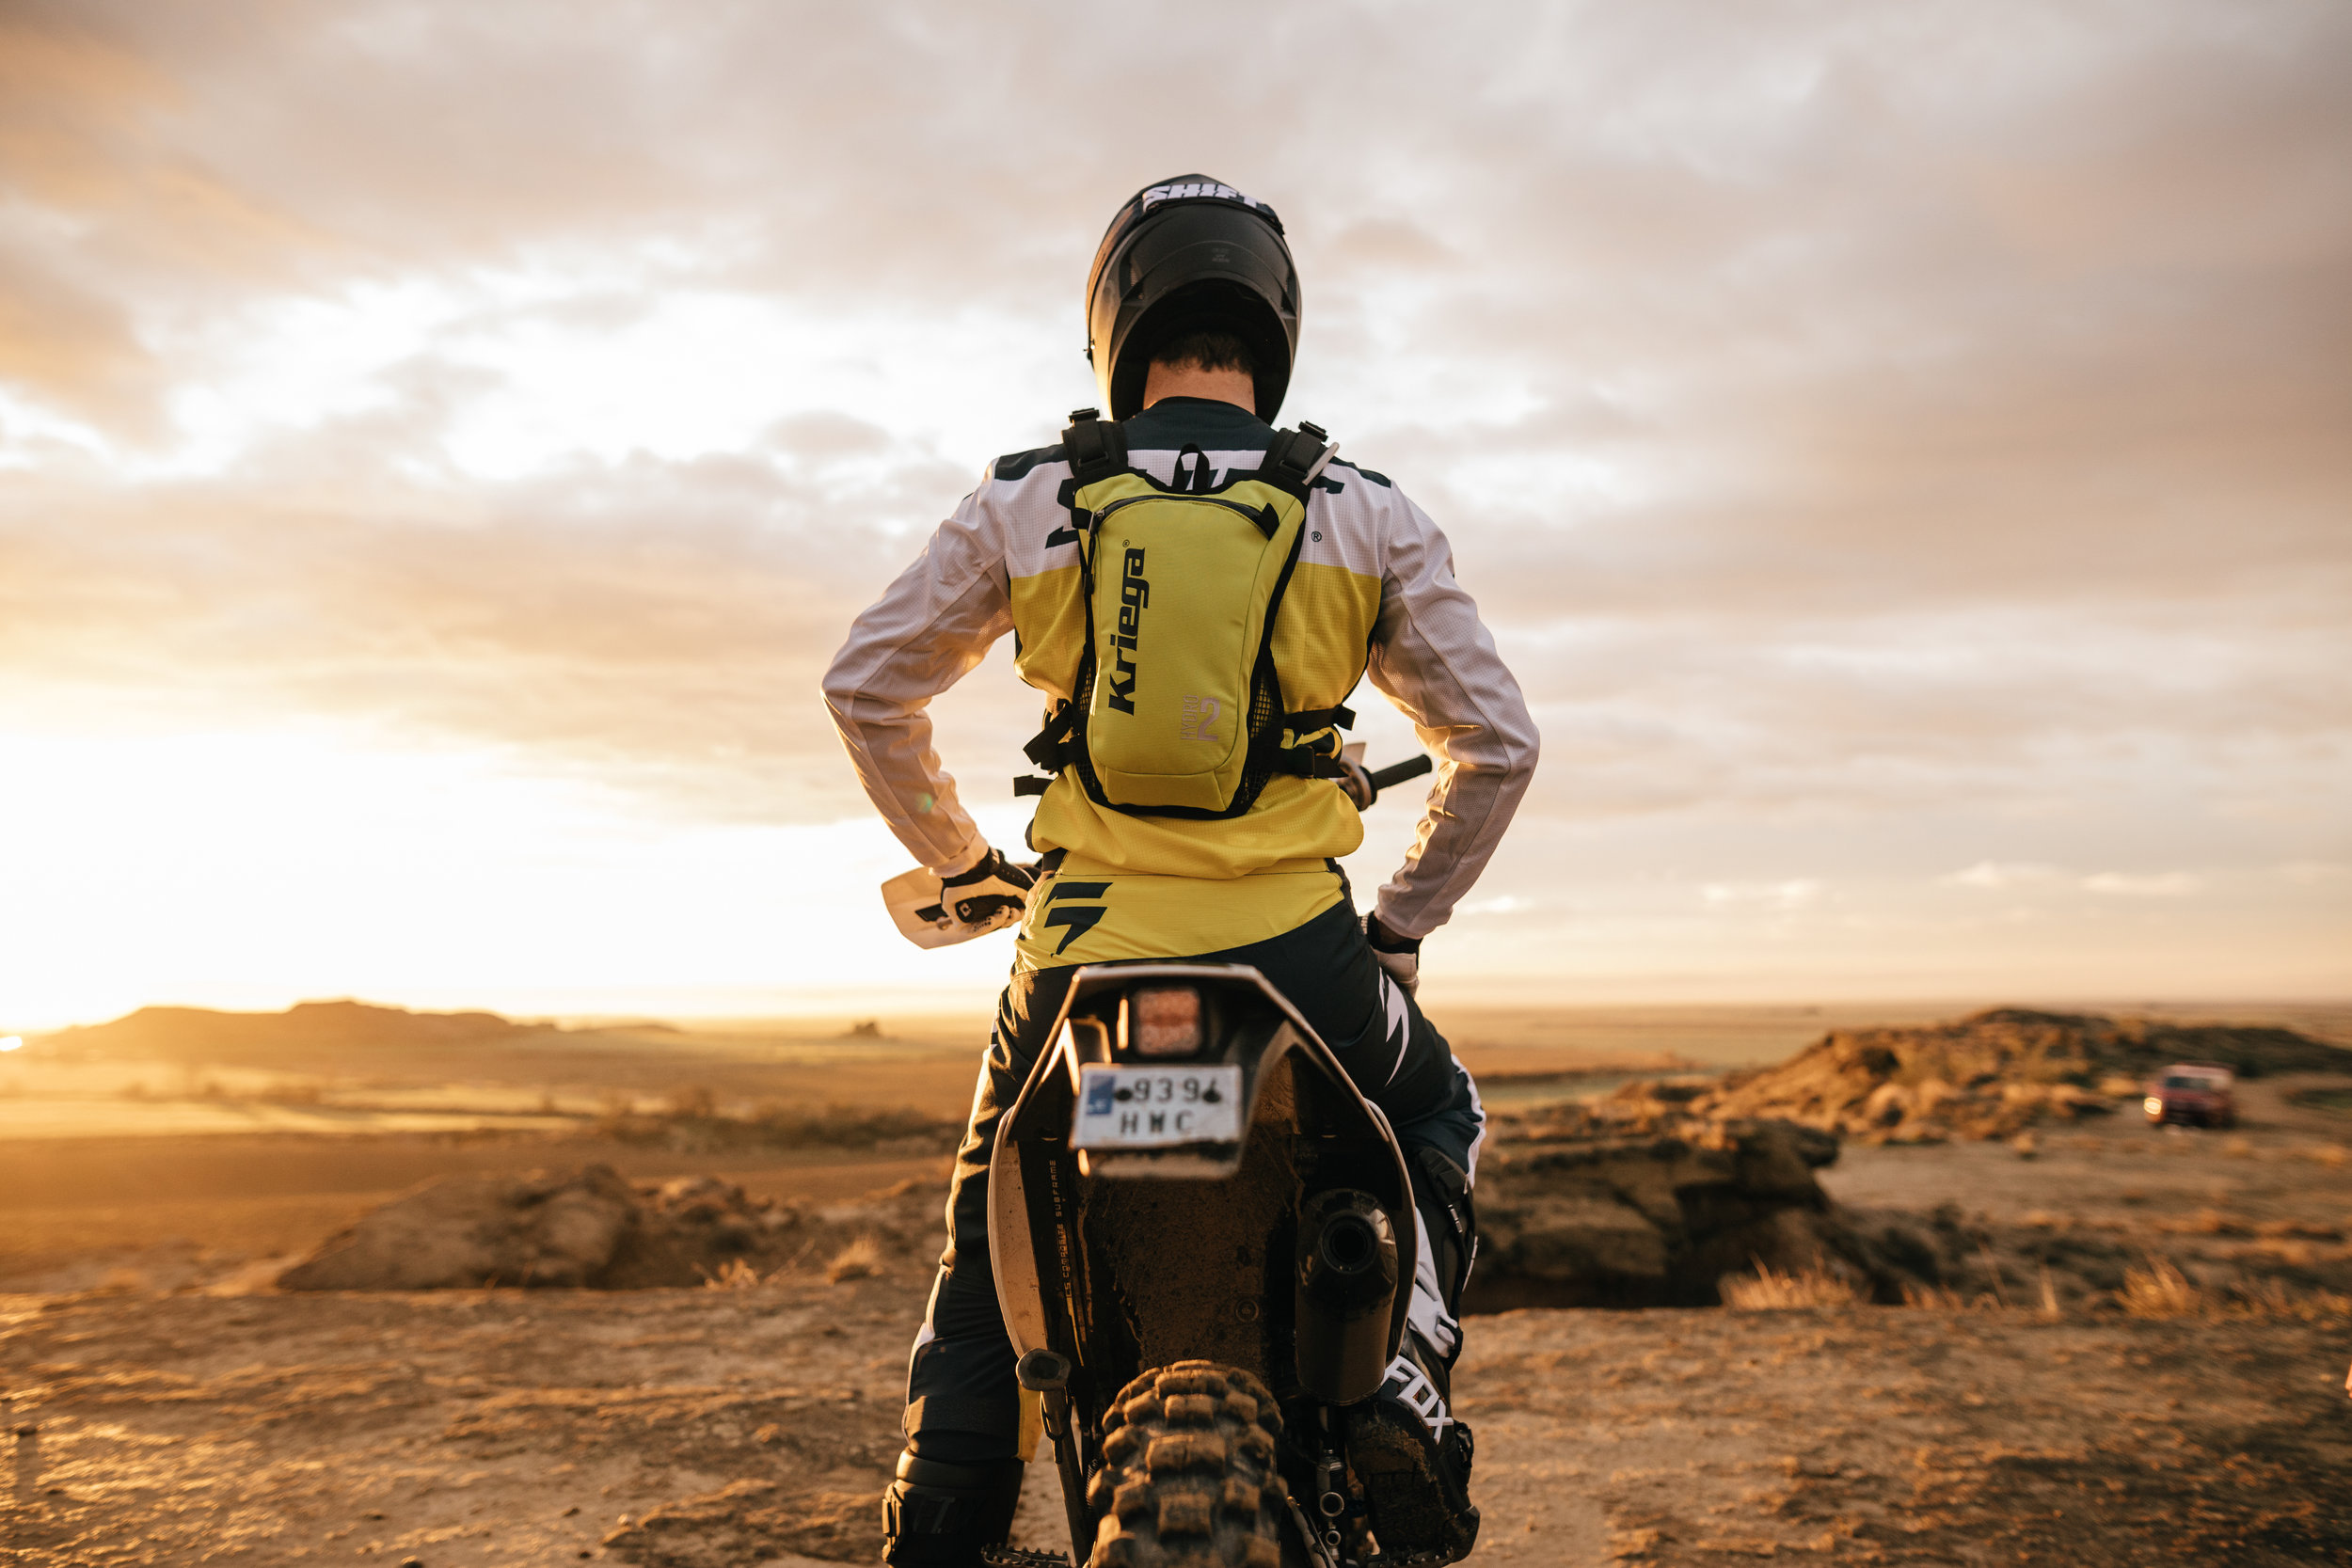 Kriega Hydro3 Range,motorcycle,hydration,backpack,enduro - Adventure Bike  Rider